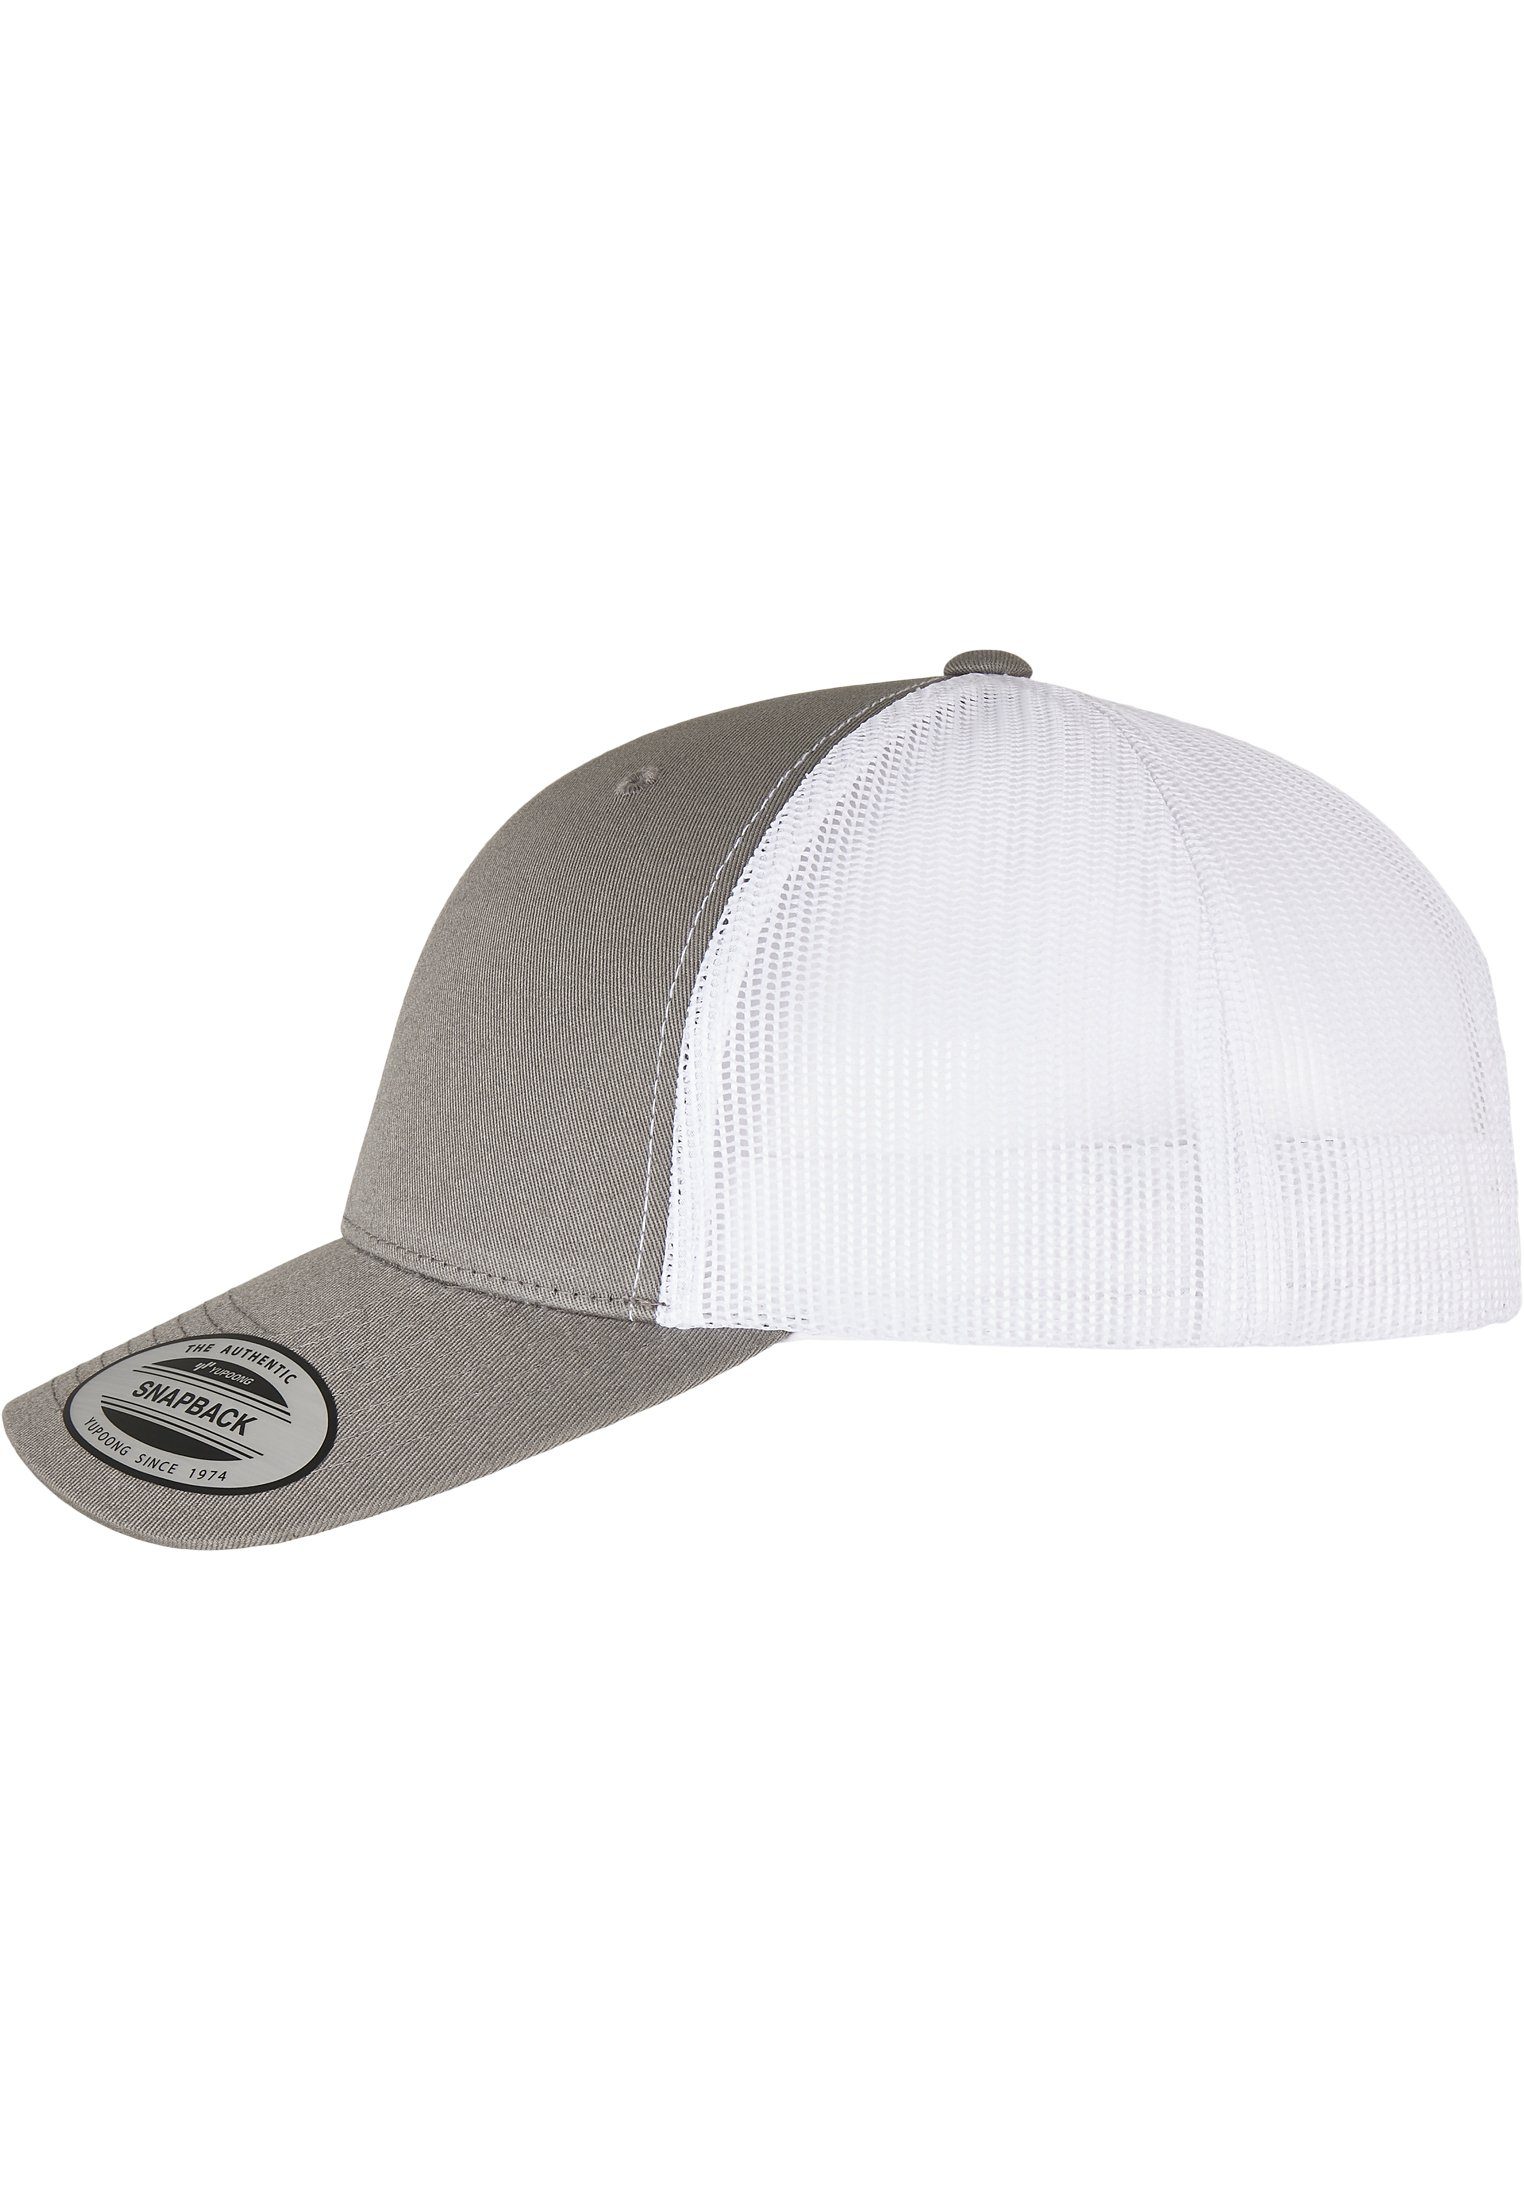 grey/white 2-TONE Flex TRUCKER RETRO CLASSICS Flexfit YP RECYCLED Cap CAP Caps